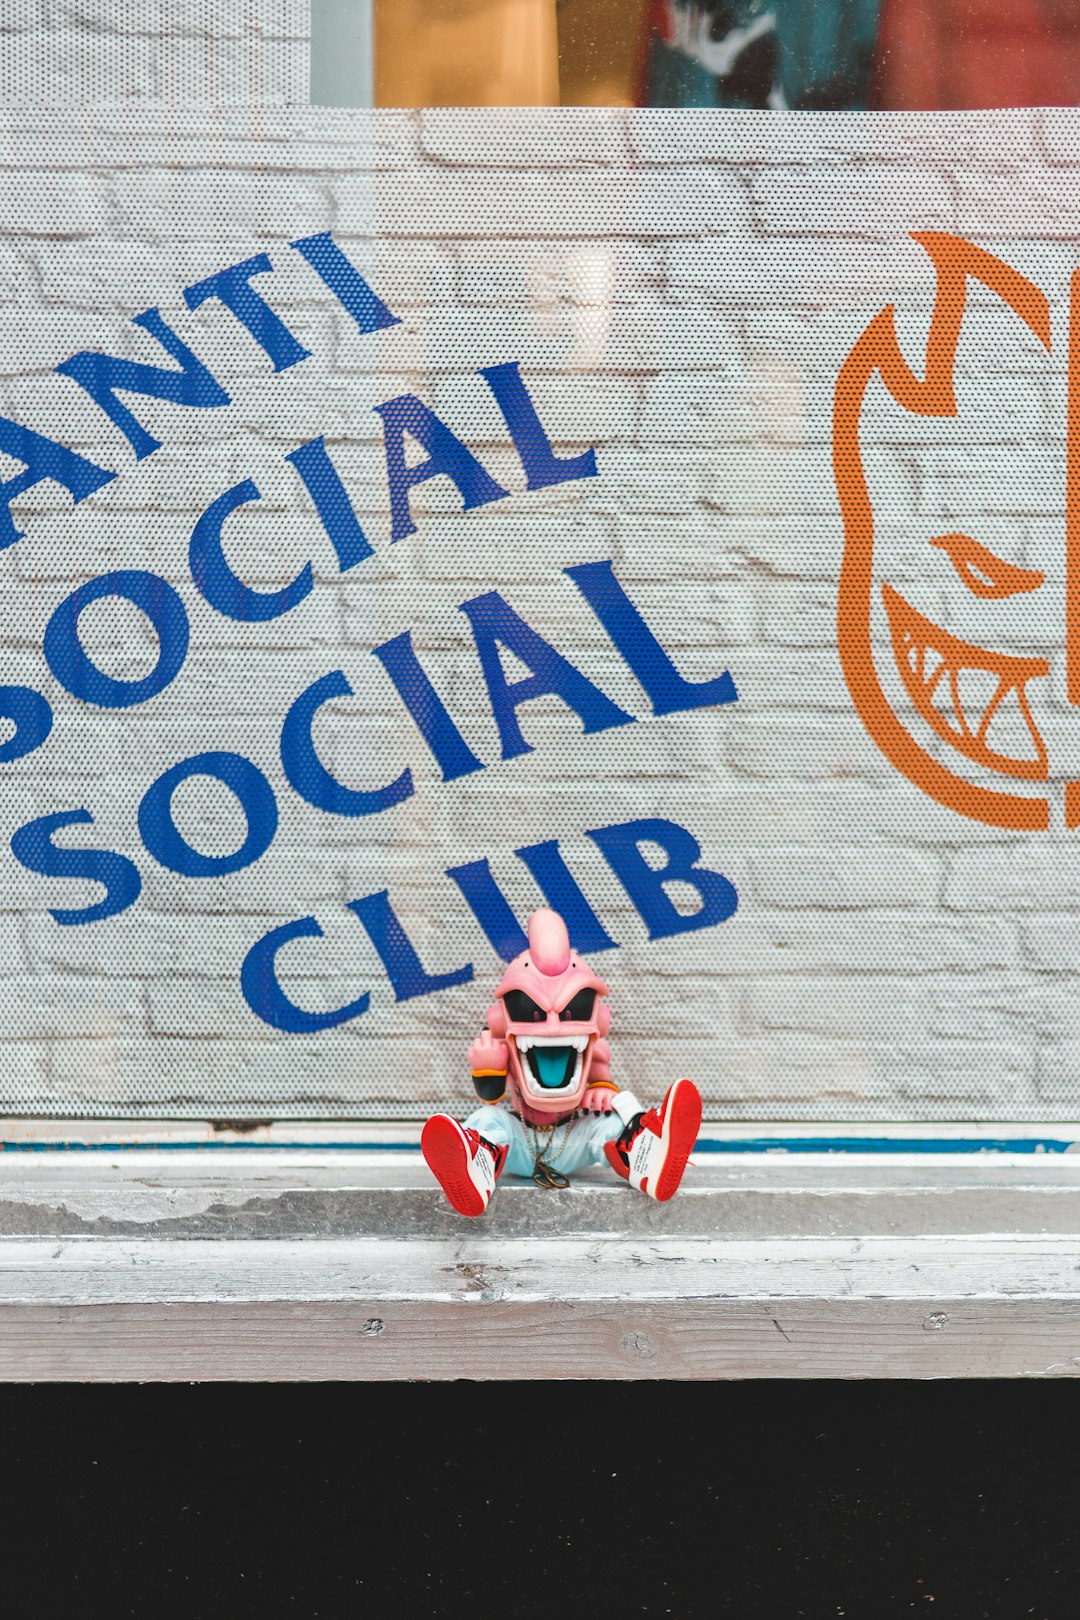 Kid Bu plush toy on sidewalk near Anti Social Social Club graffiti art